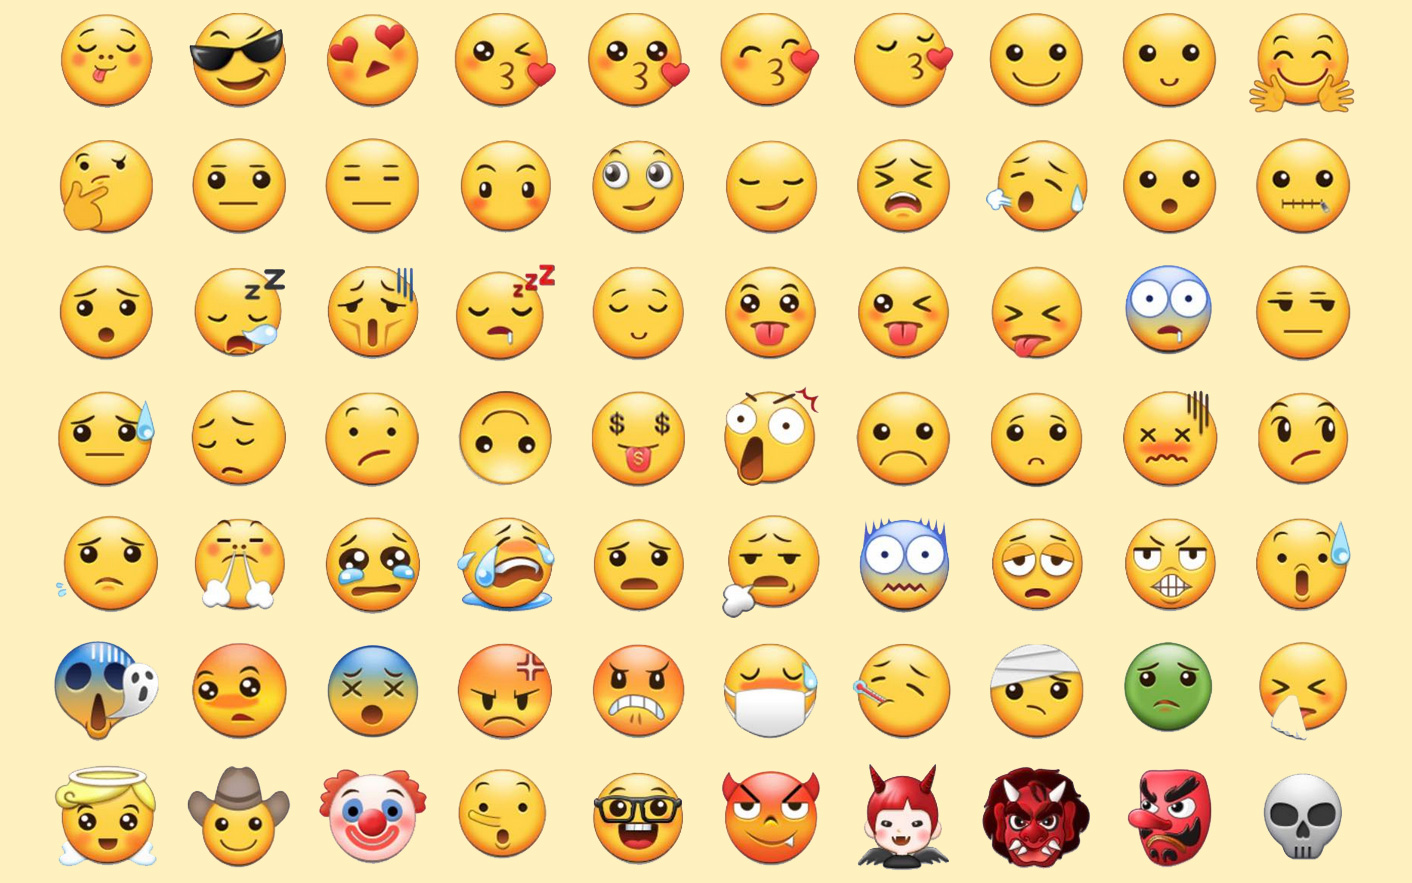 Old samsung emojis.